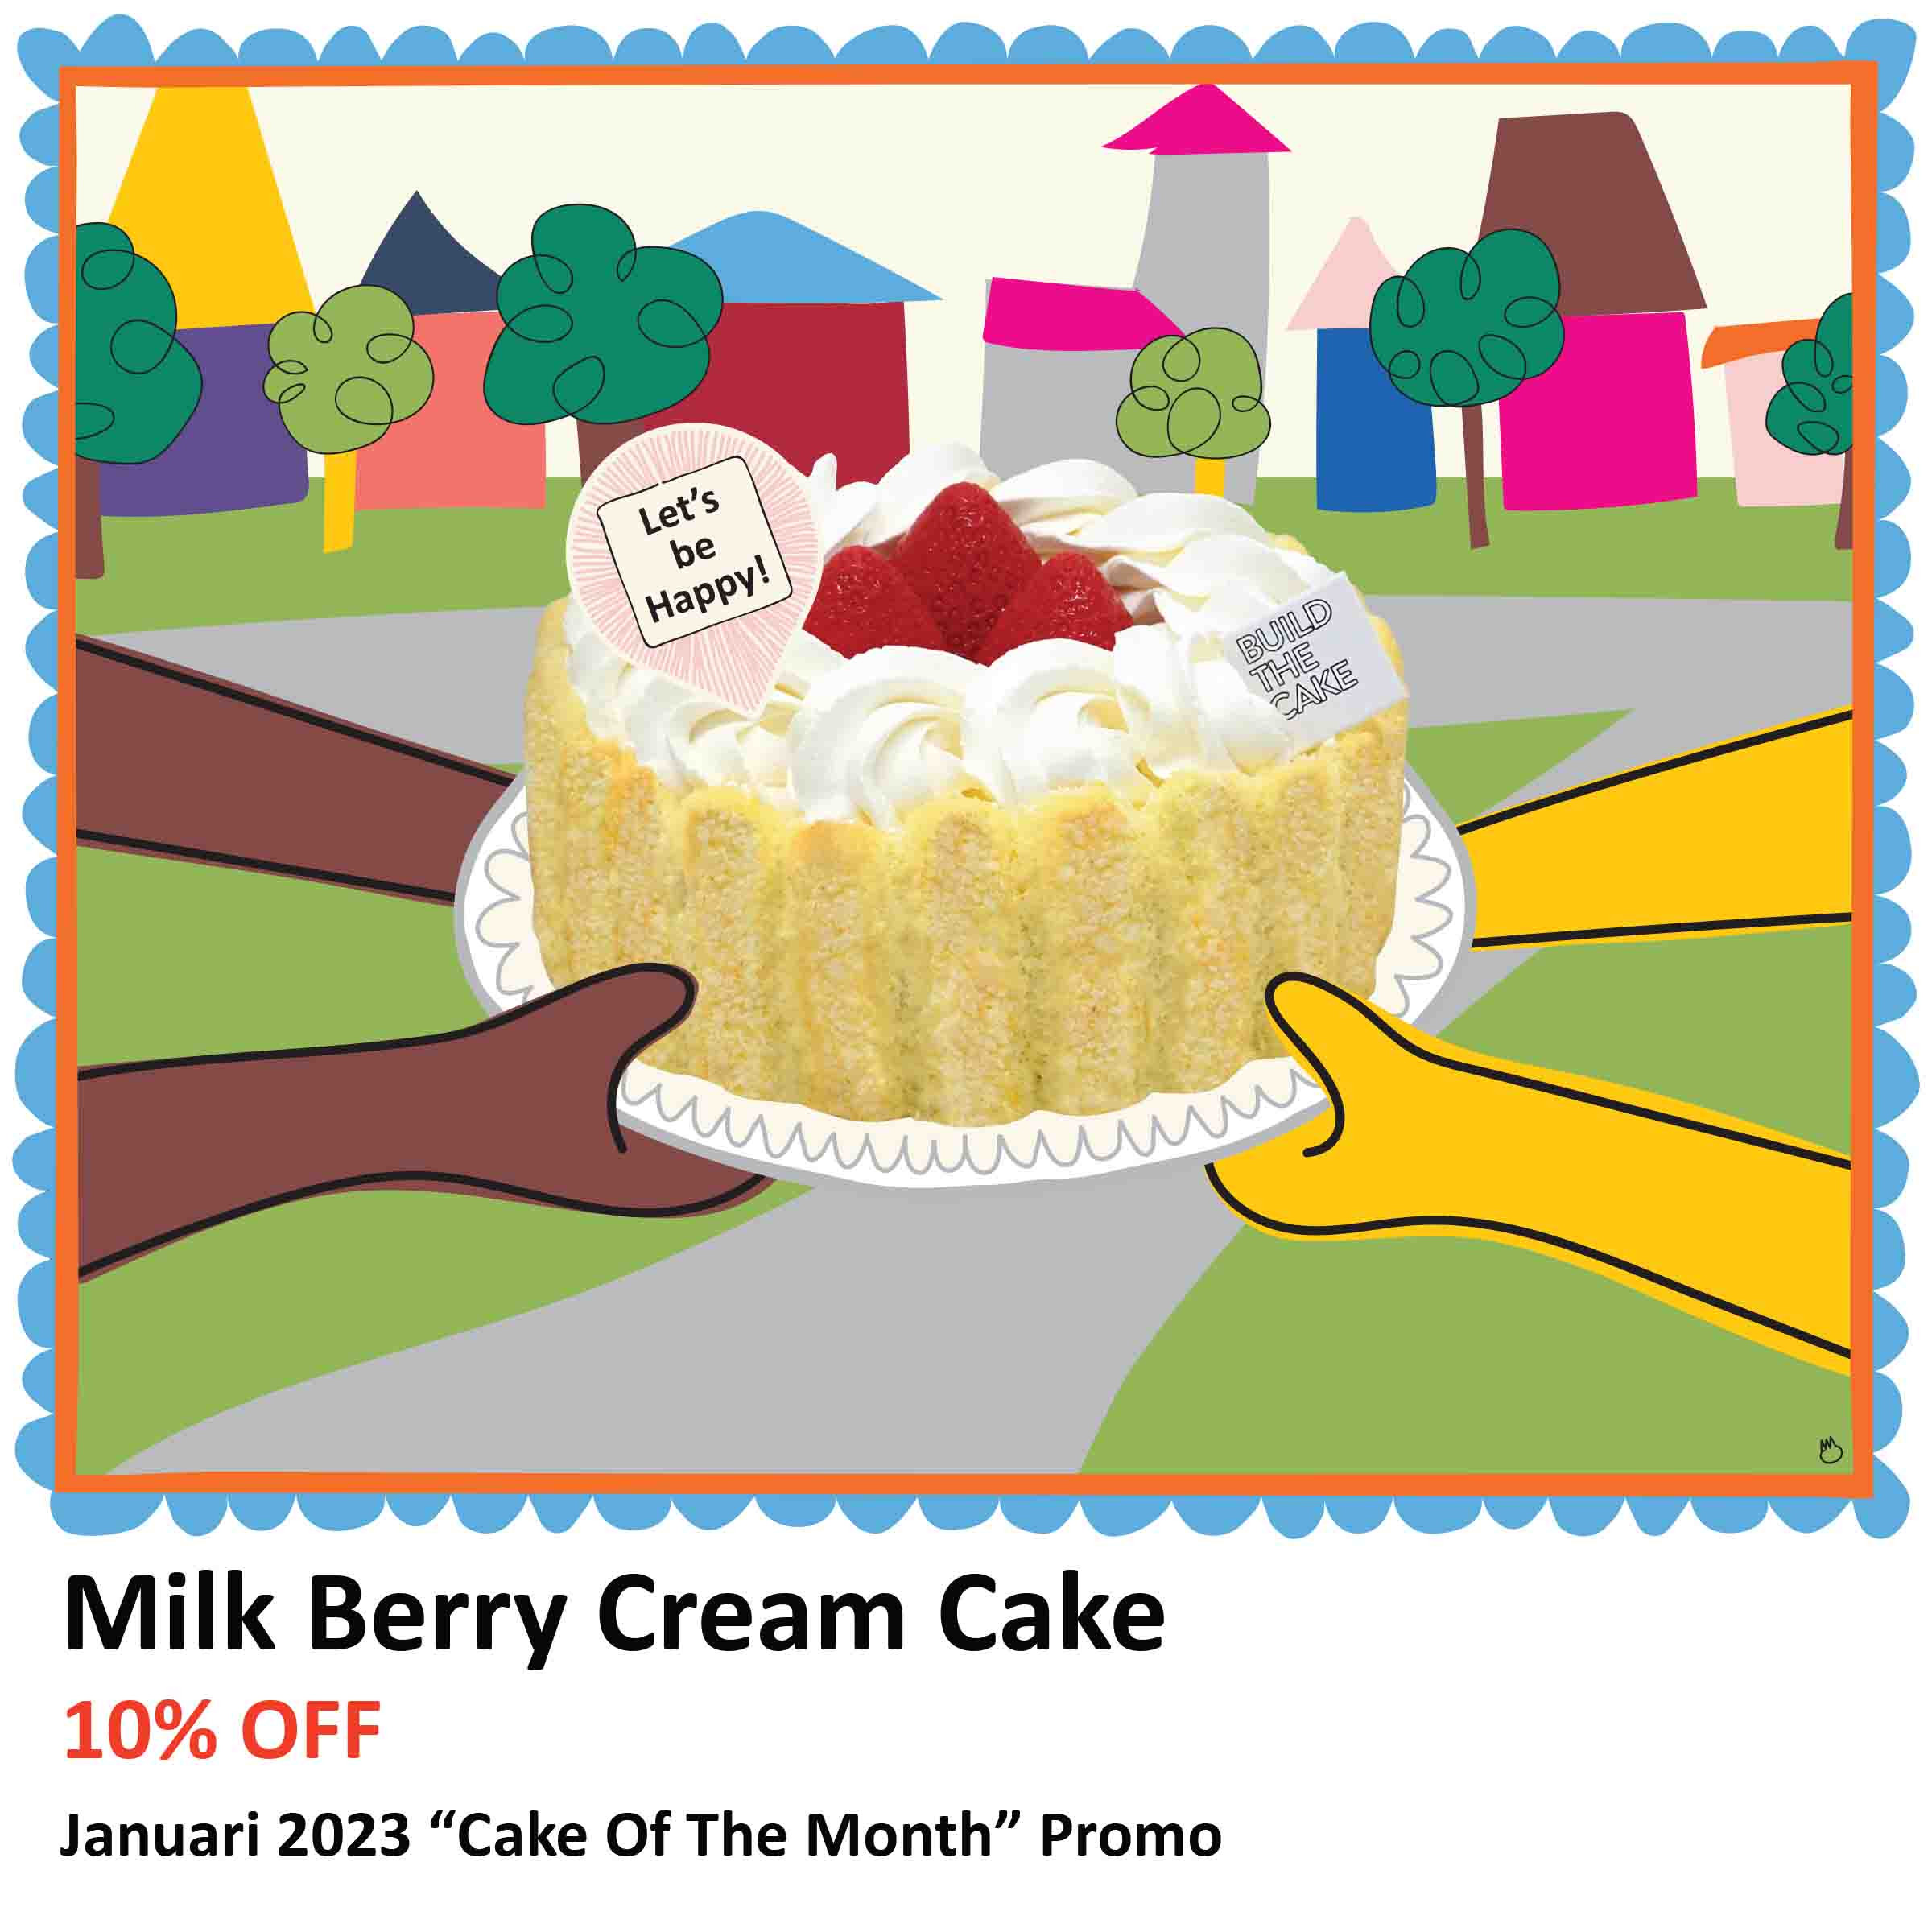 Milk Berry Cream Cake